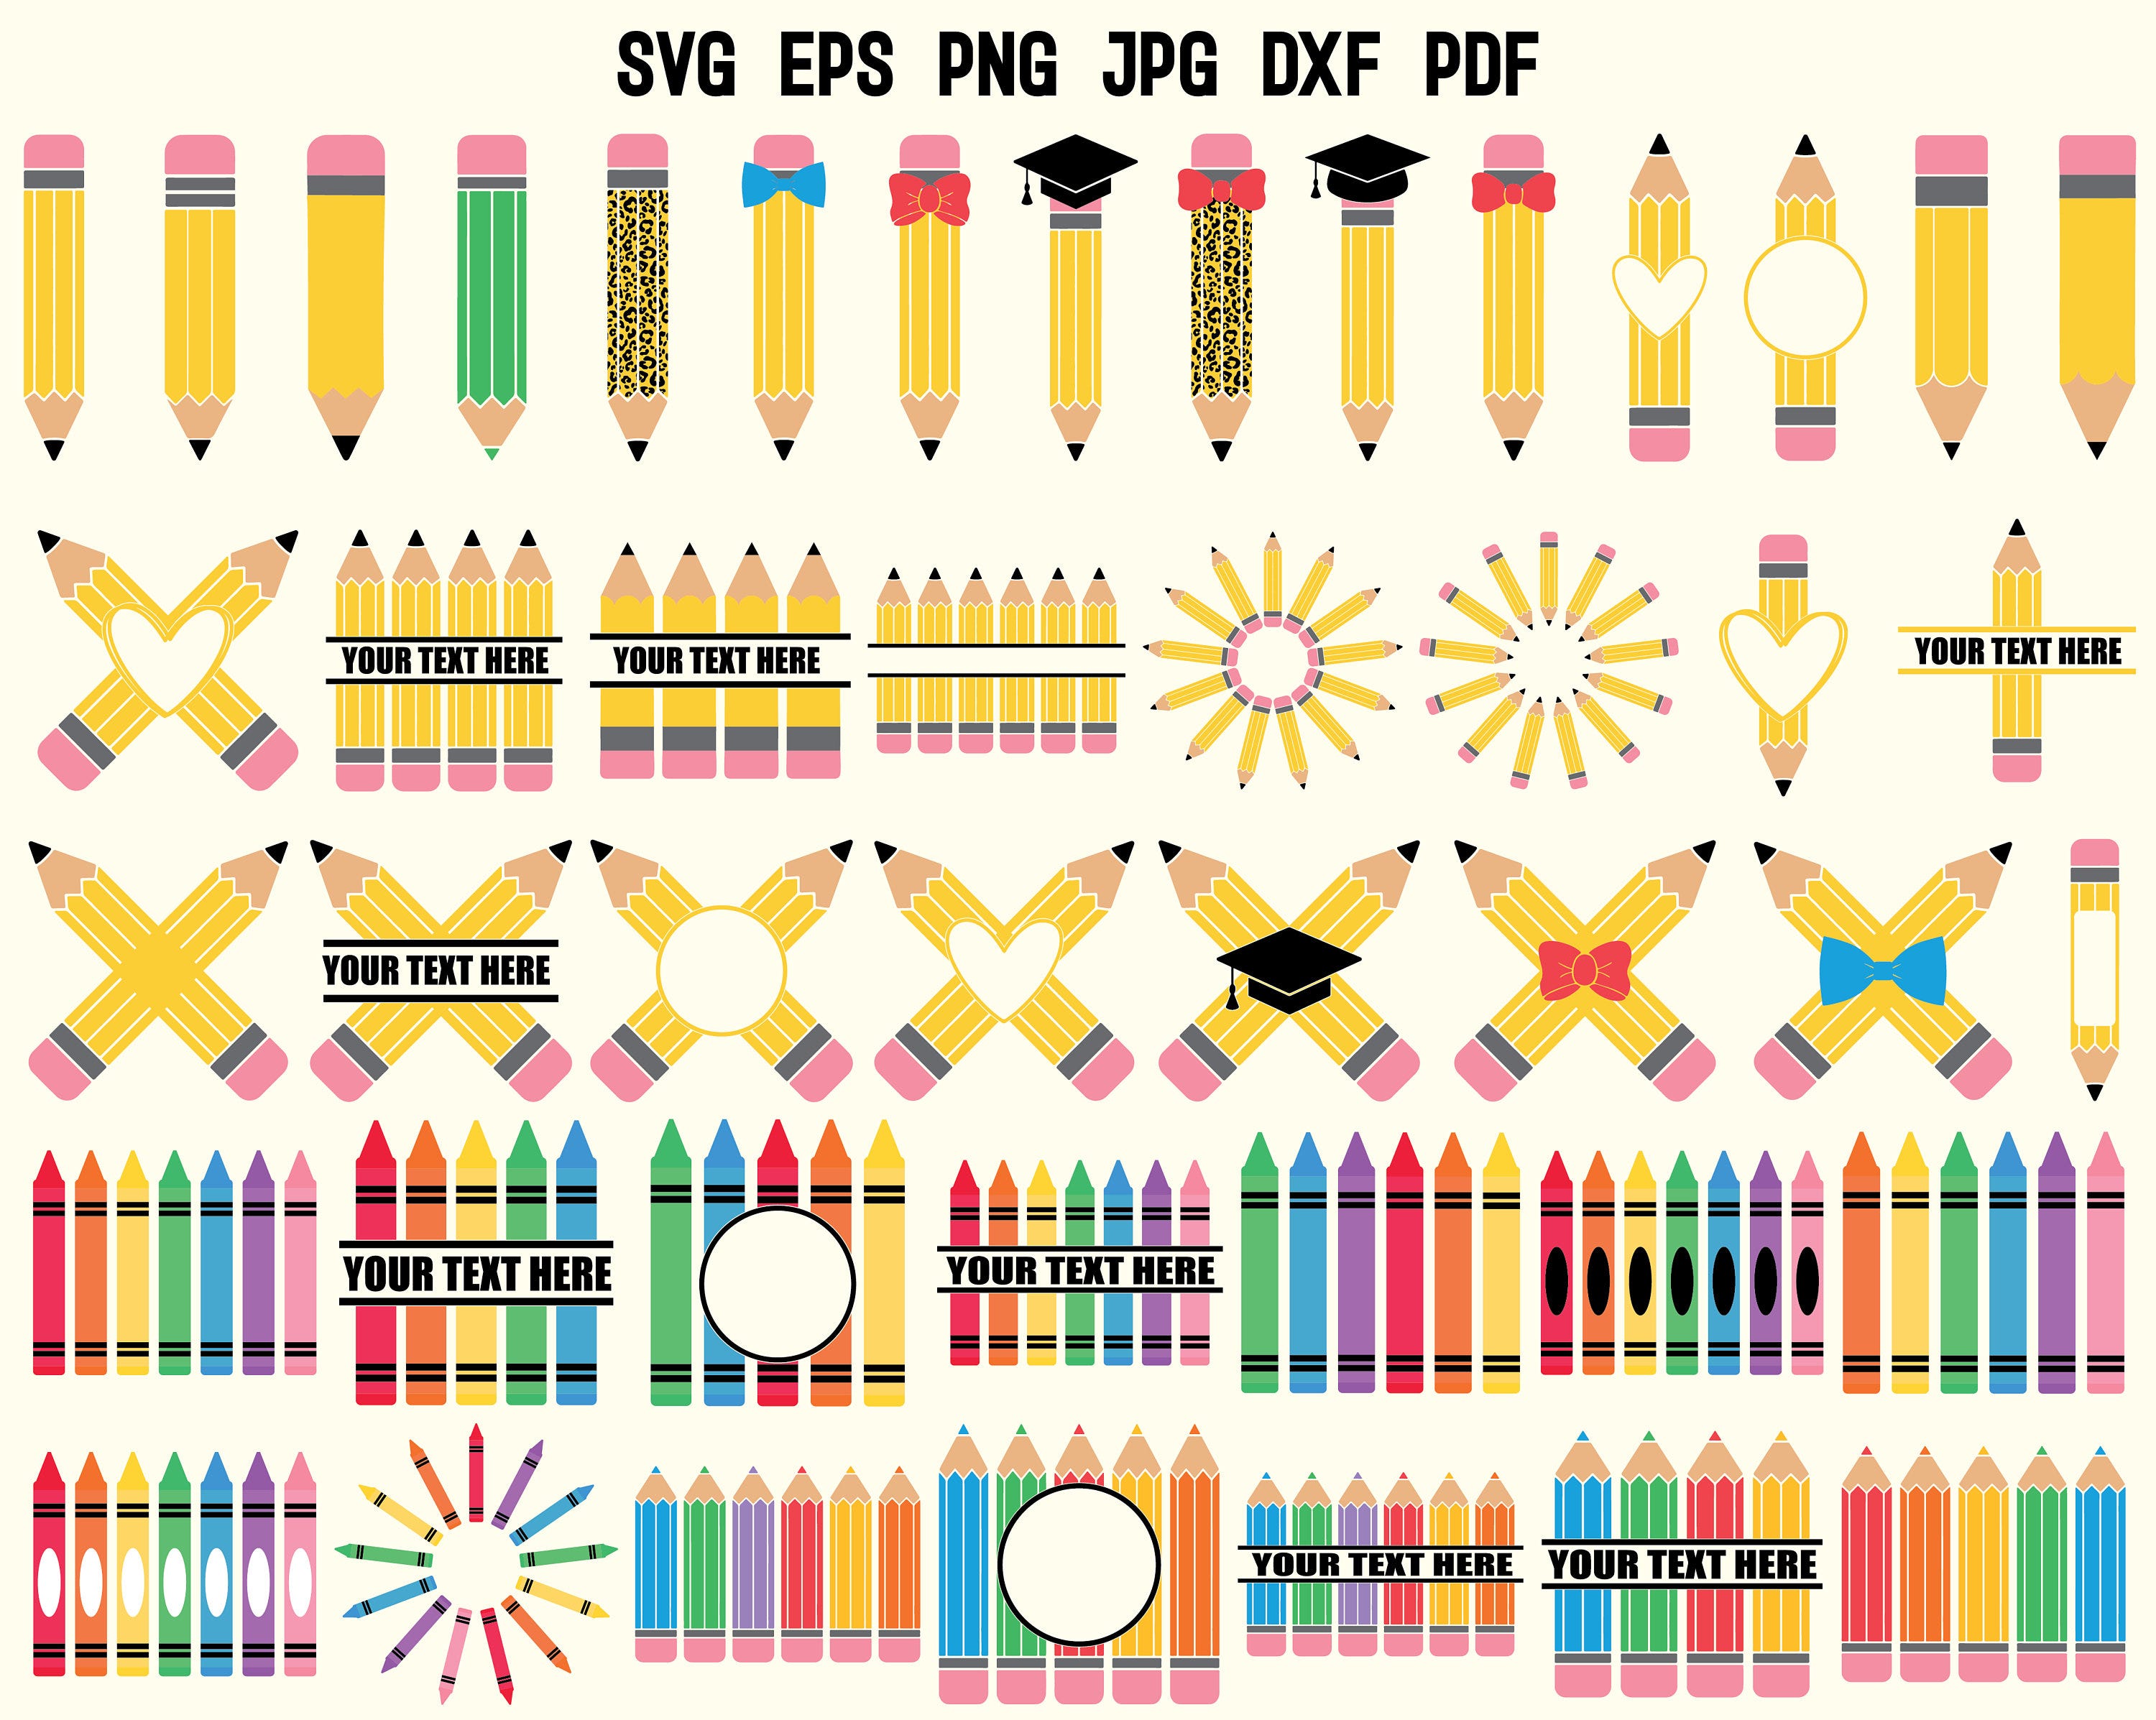 Pencil SVG PNG | Pencil Clipart | Teacher SVG | School Svg | Pencil Monogram | Pencil Name Svg | Crayon Svg | School Supplies Svg | T shirt